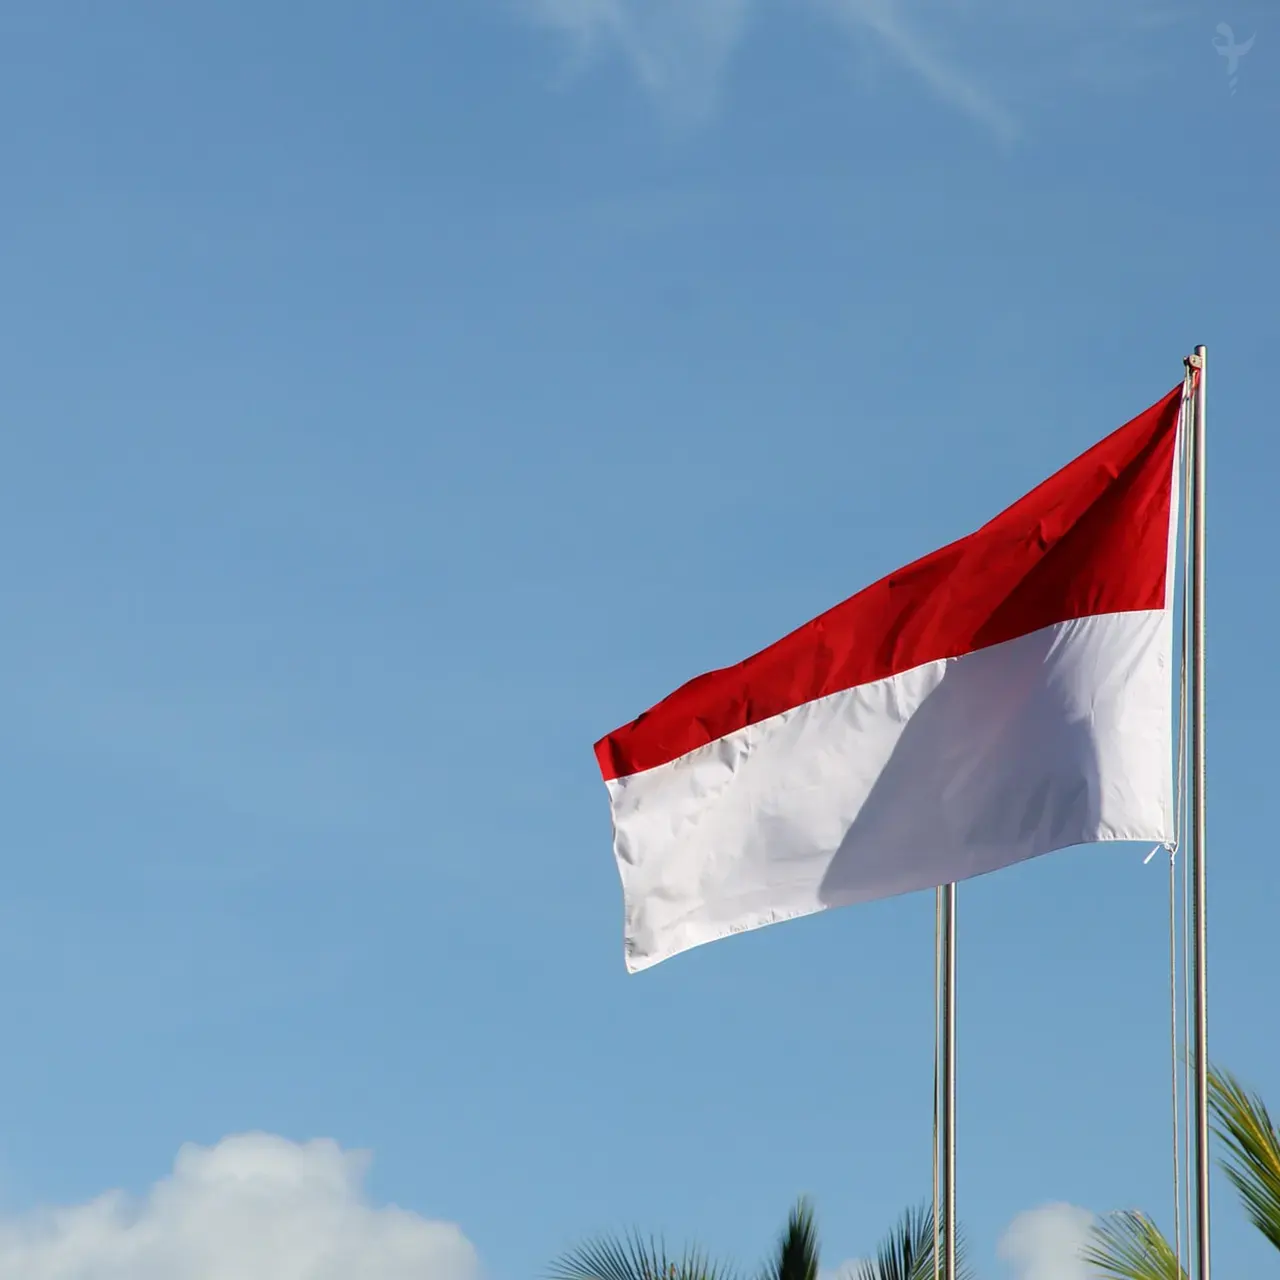 Merah Putih Flag Indonesia, Photo by Nick Agus Arya on Unsplash